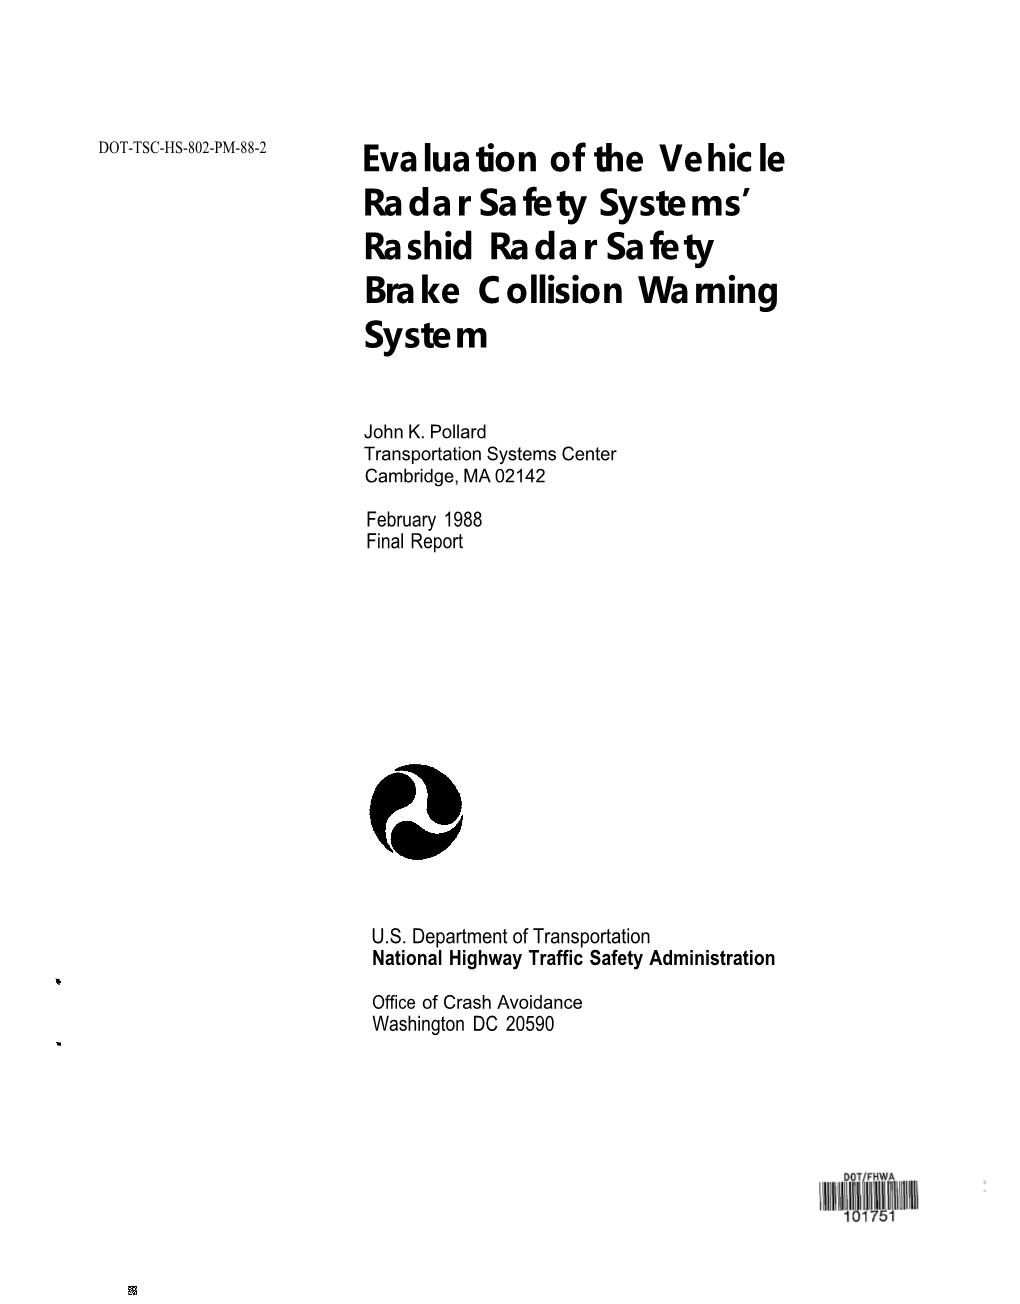 Evaluation of the Vehicle Radar Safety Systems' Rashid Radar Safety